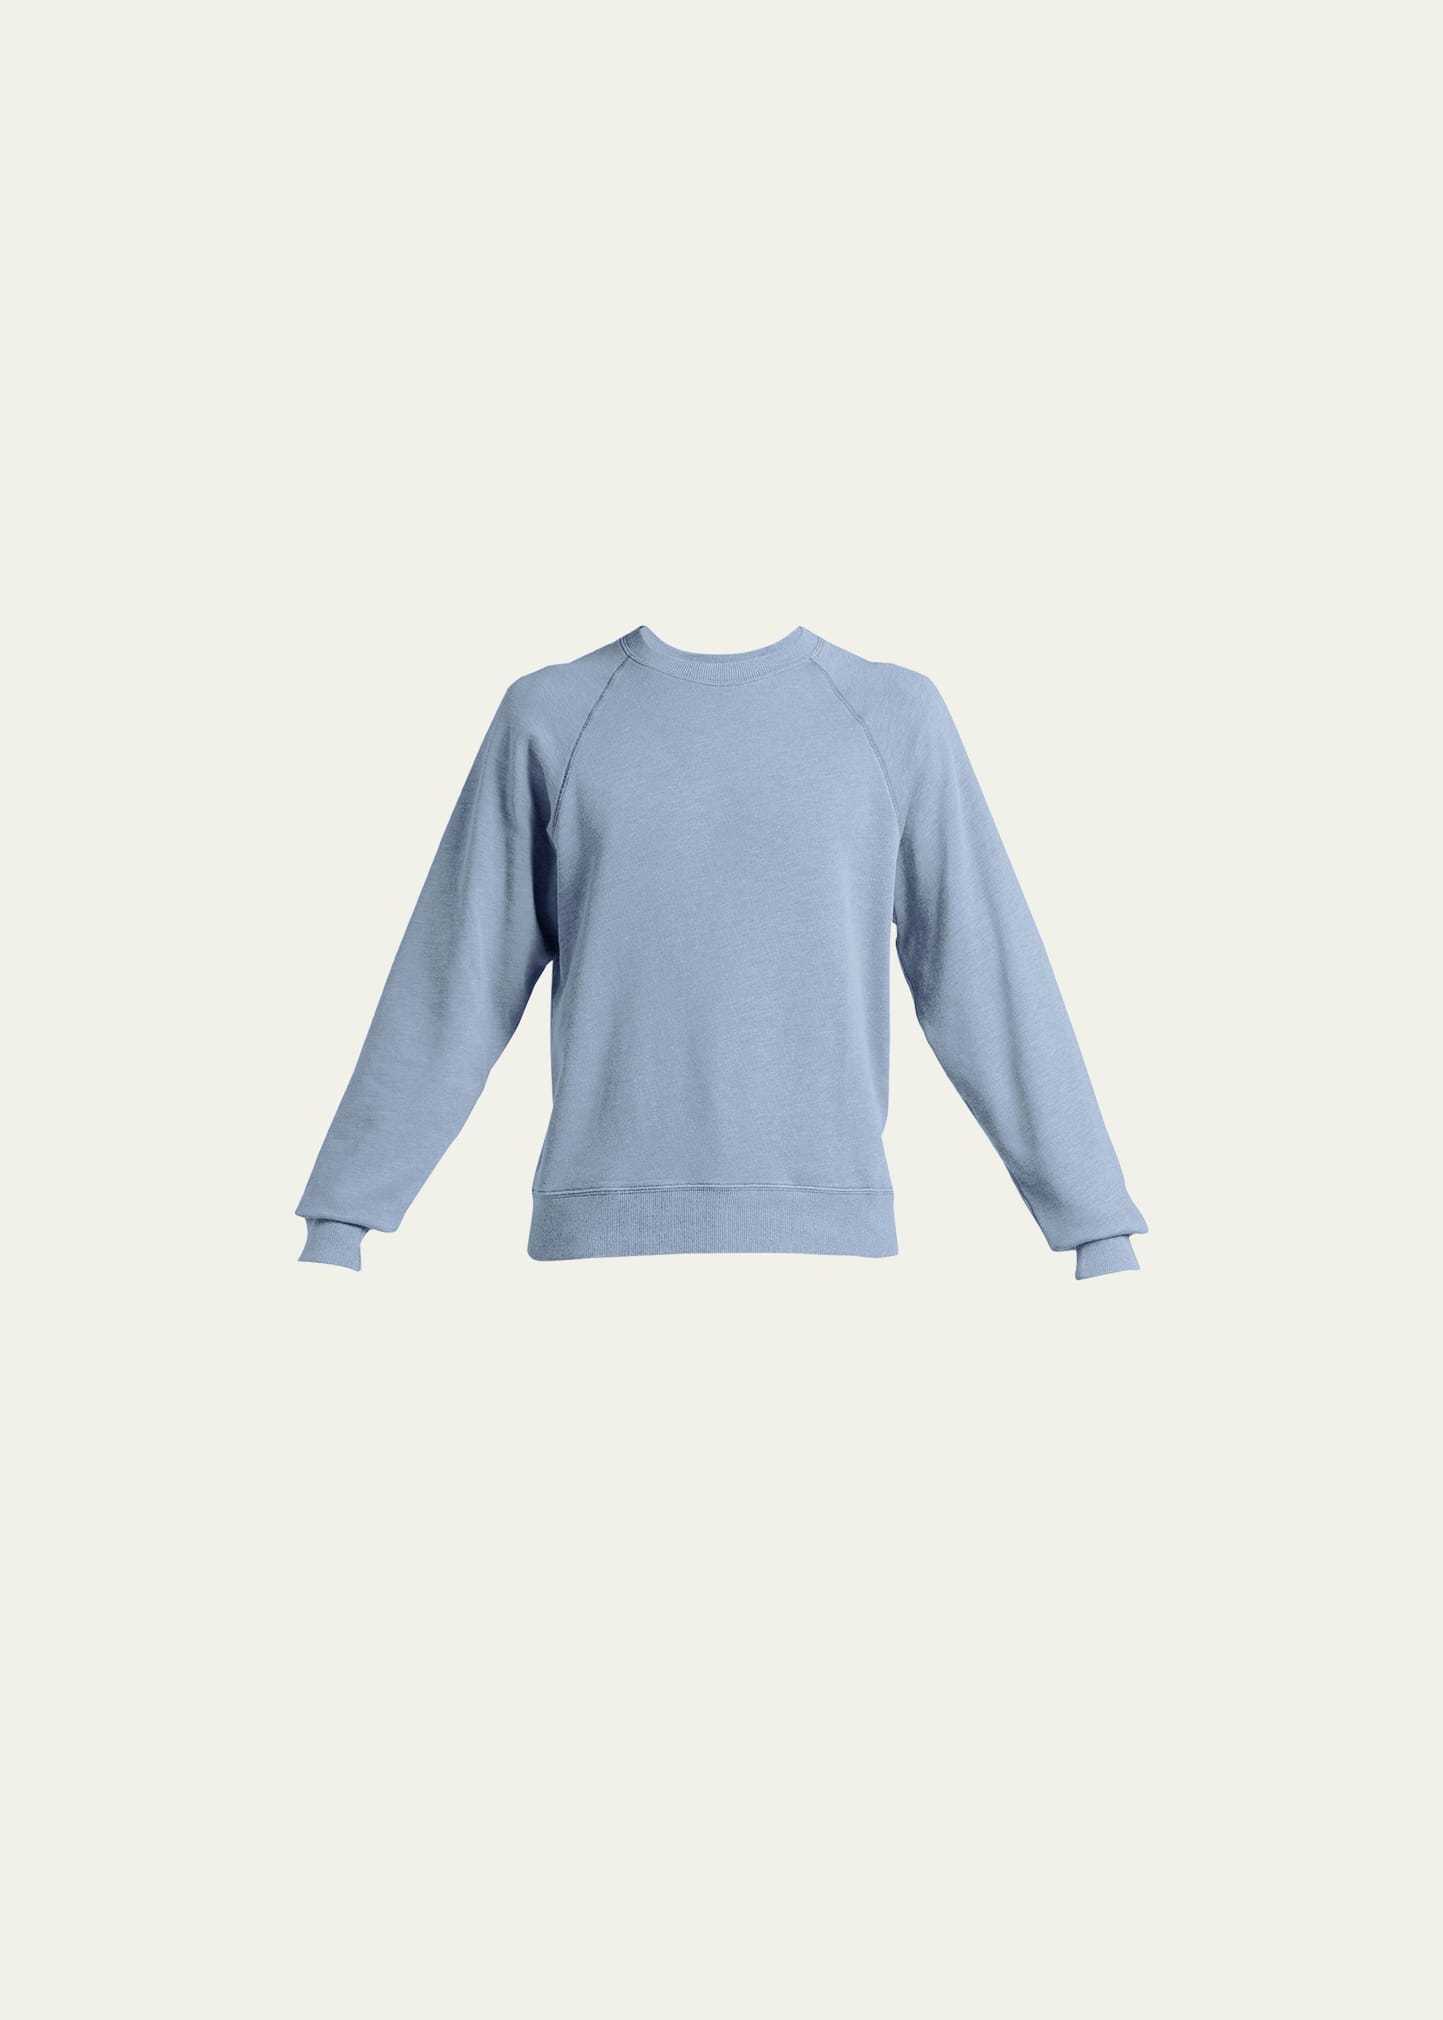 Tom Ford Men's Mélange Cotton Jersey Sweatshirt In Light Blue Solid